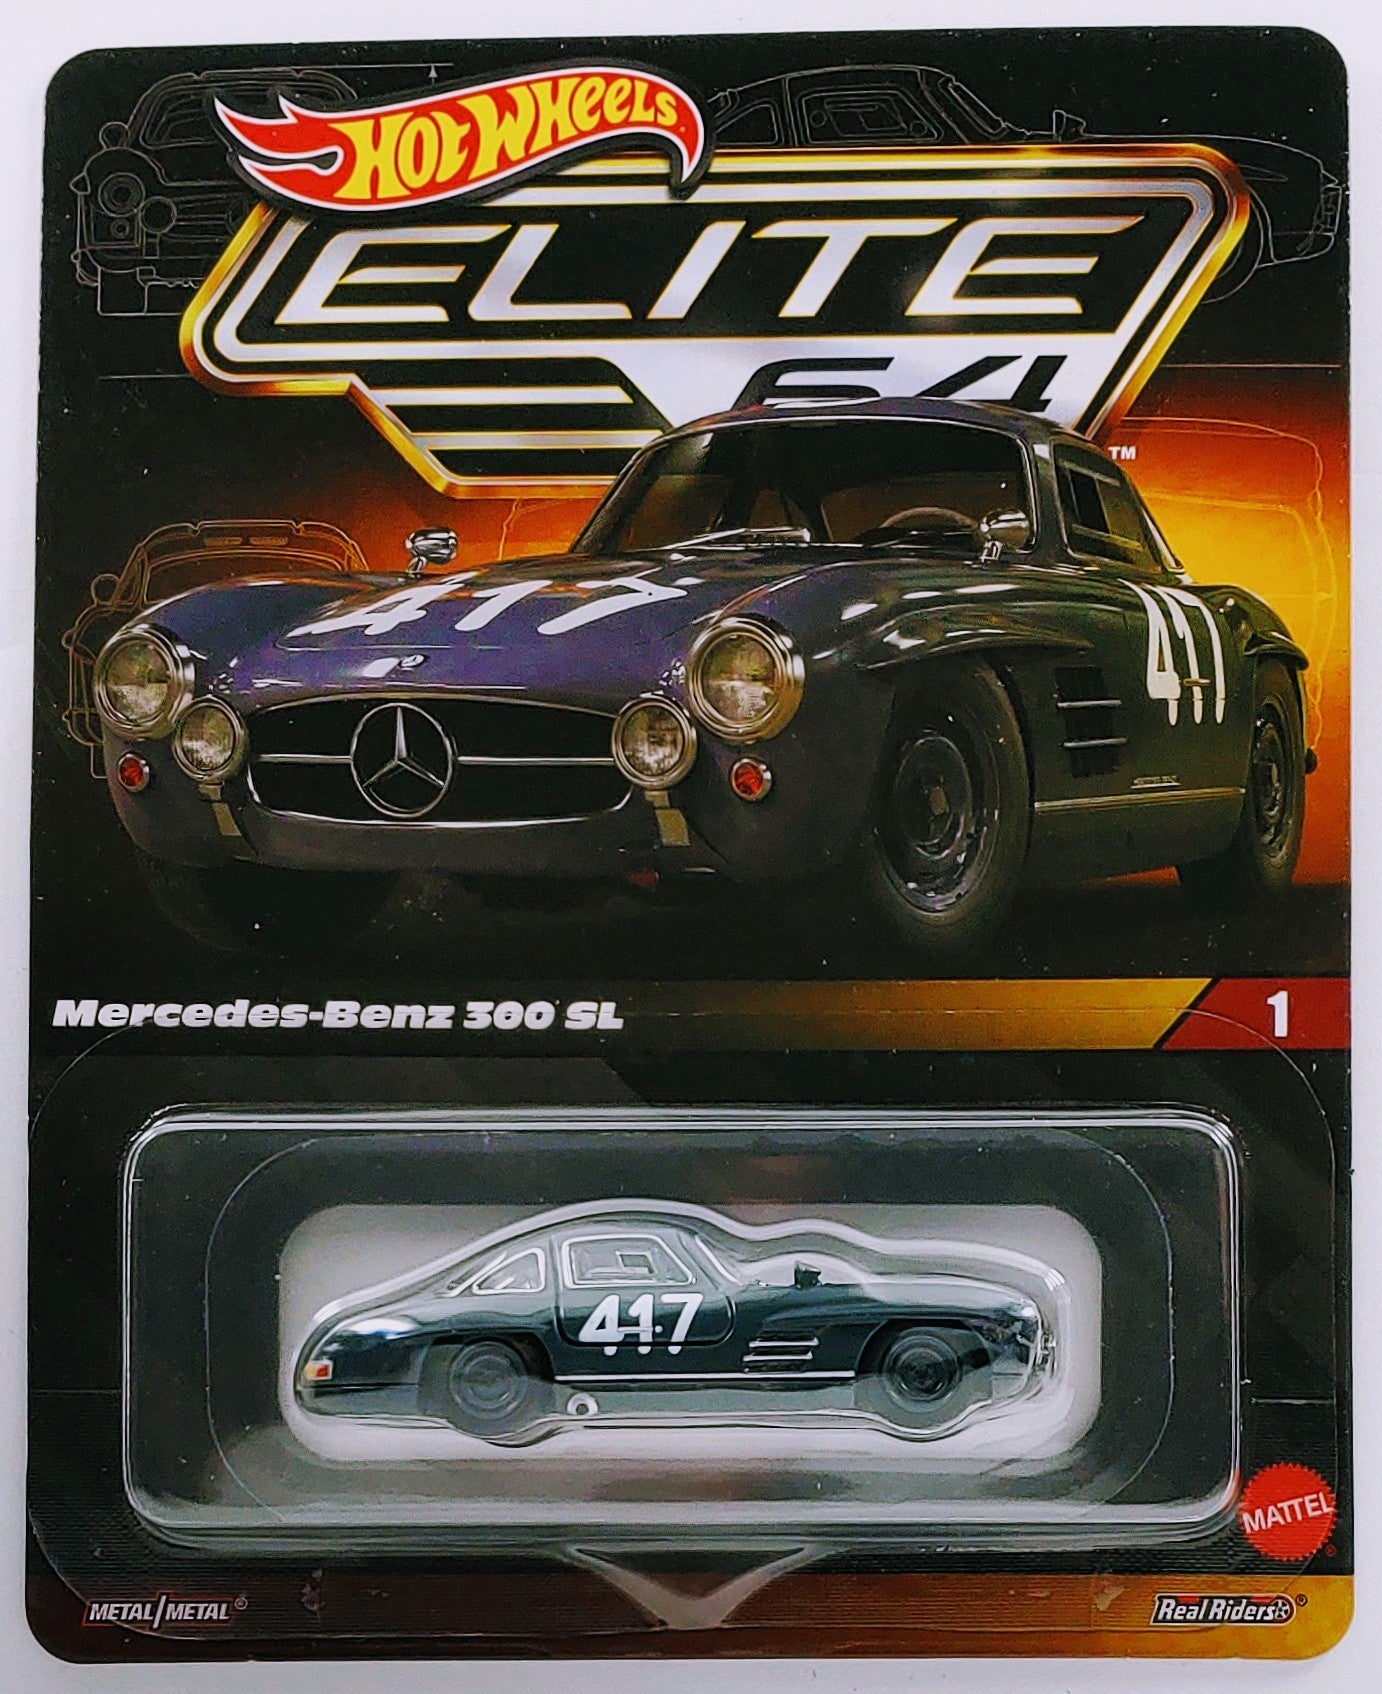 Hot Wheels 2023 - Elite 64 # 1 - Mercedes-Benz 500 SL - Gray / # 417 - Metal/Metal & Real Riders - Opening Gullwing Doors - Highly Detailed